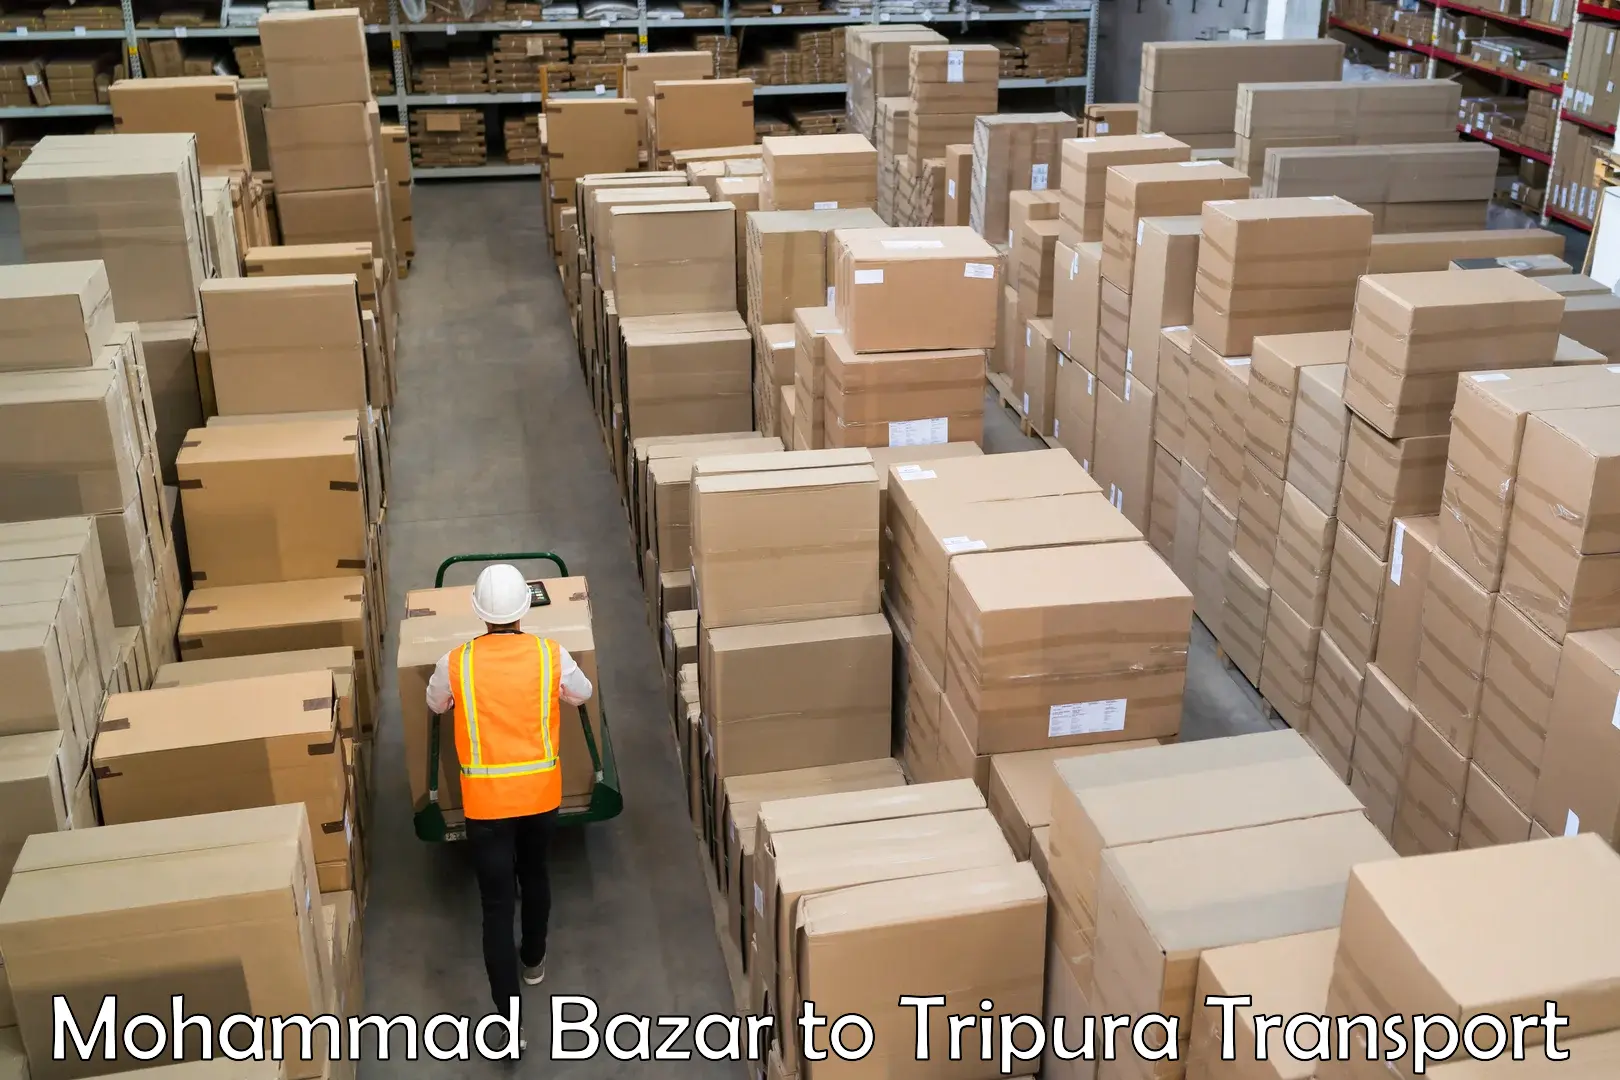 Delivery service Mohammad Bazar to Tripura